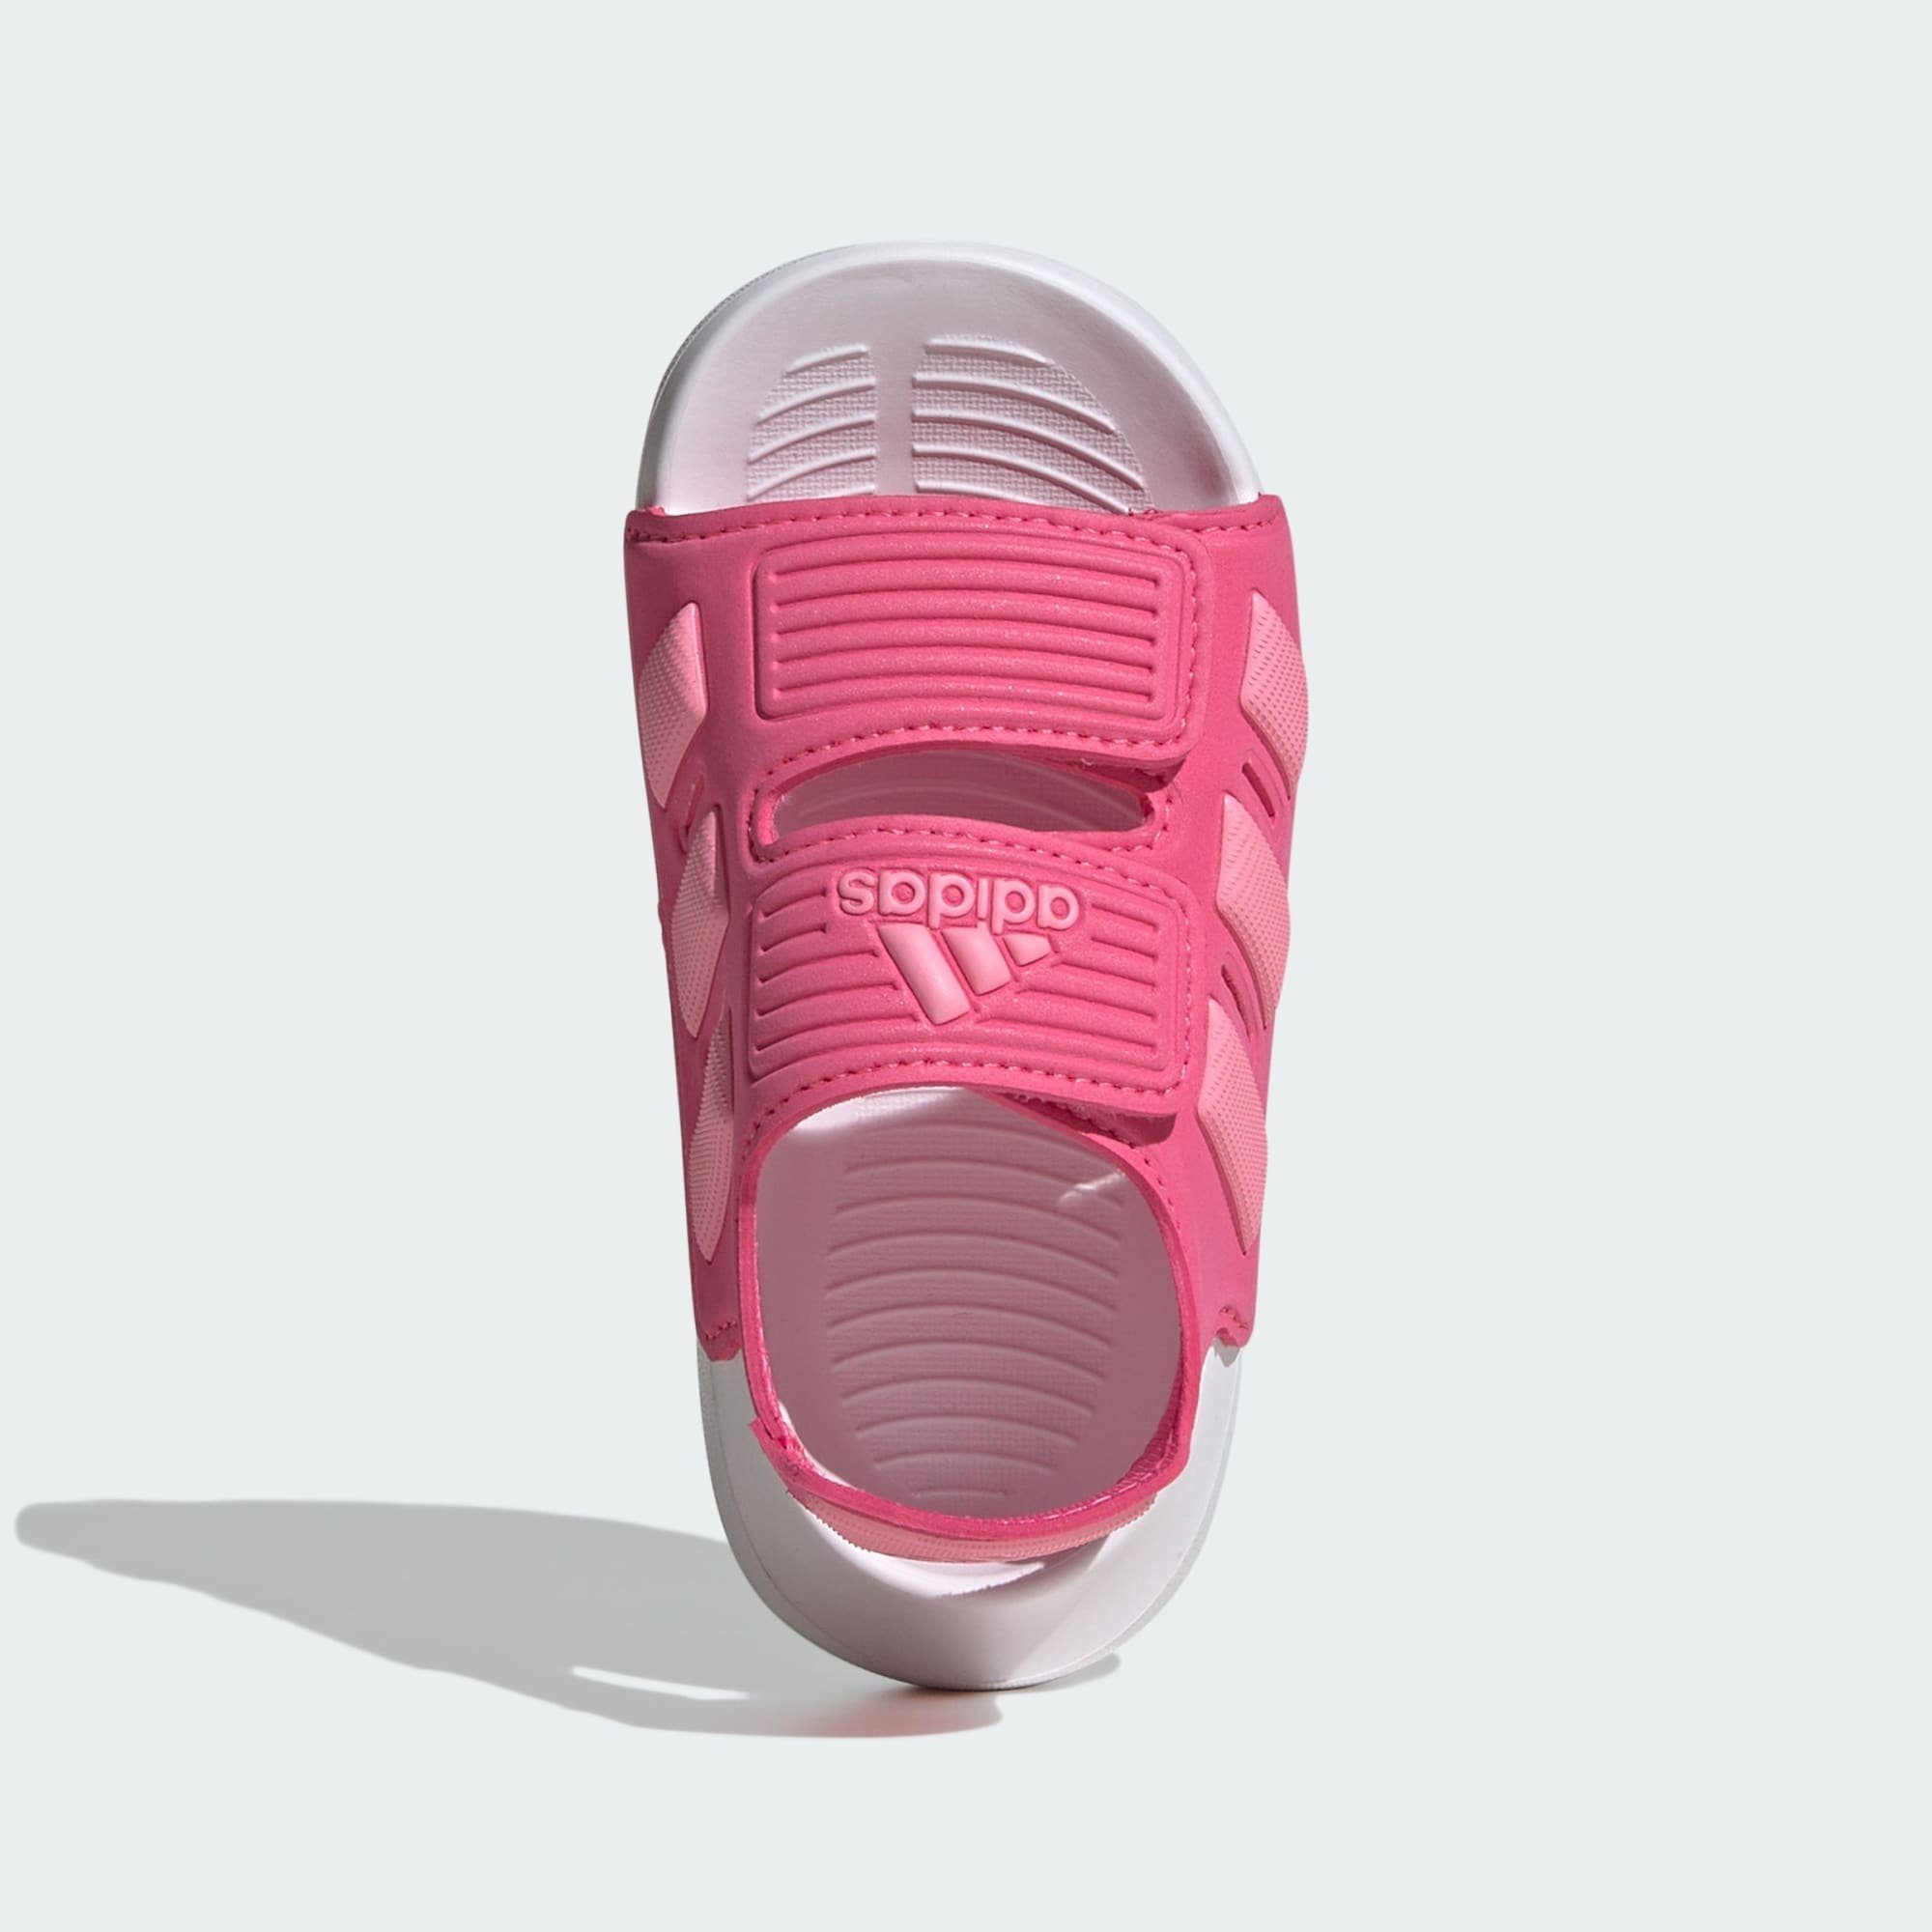 / Badesandale Pulse Sportswear White Cloud ALTASWIM / Magenta KIDS Pink adidas 2.0 Bliss SANDALS